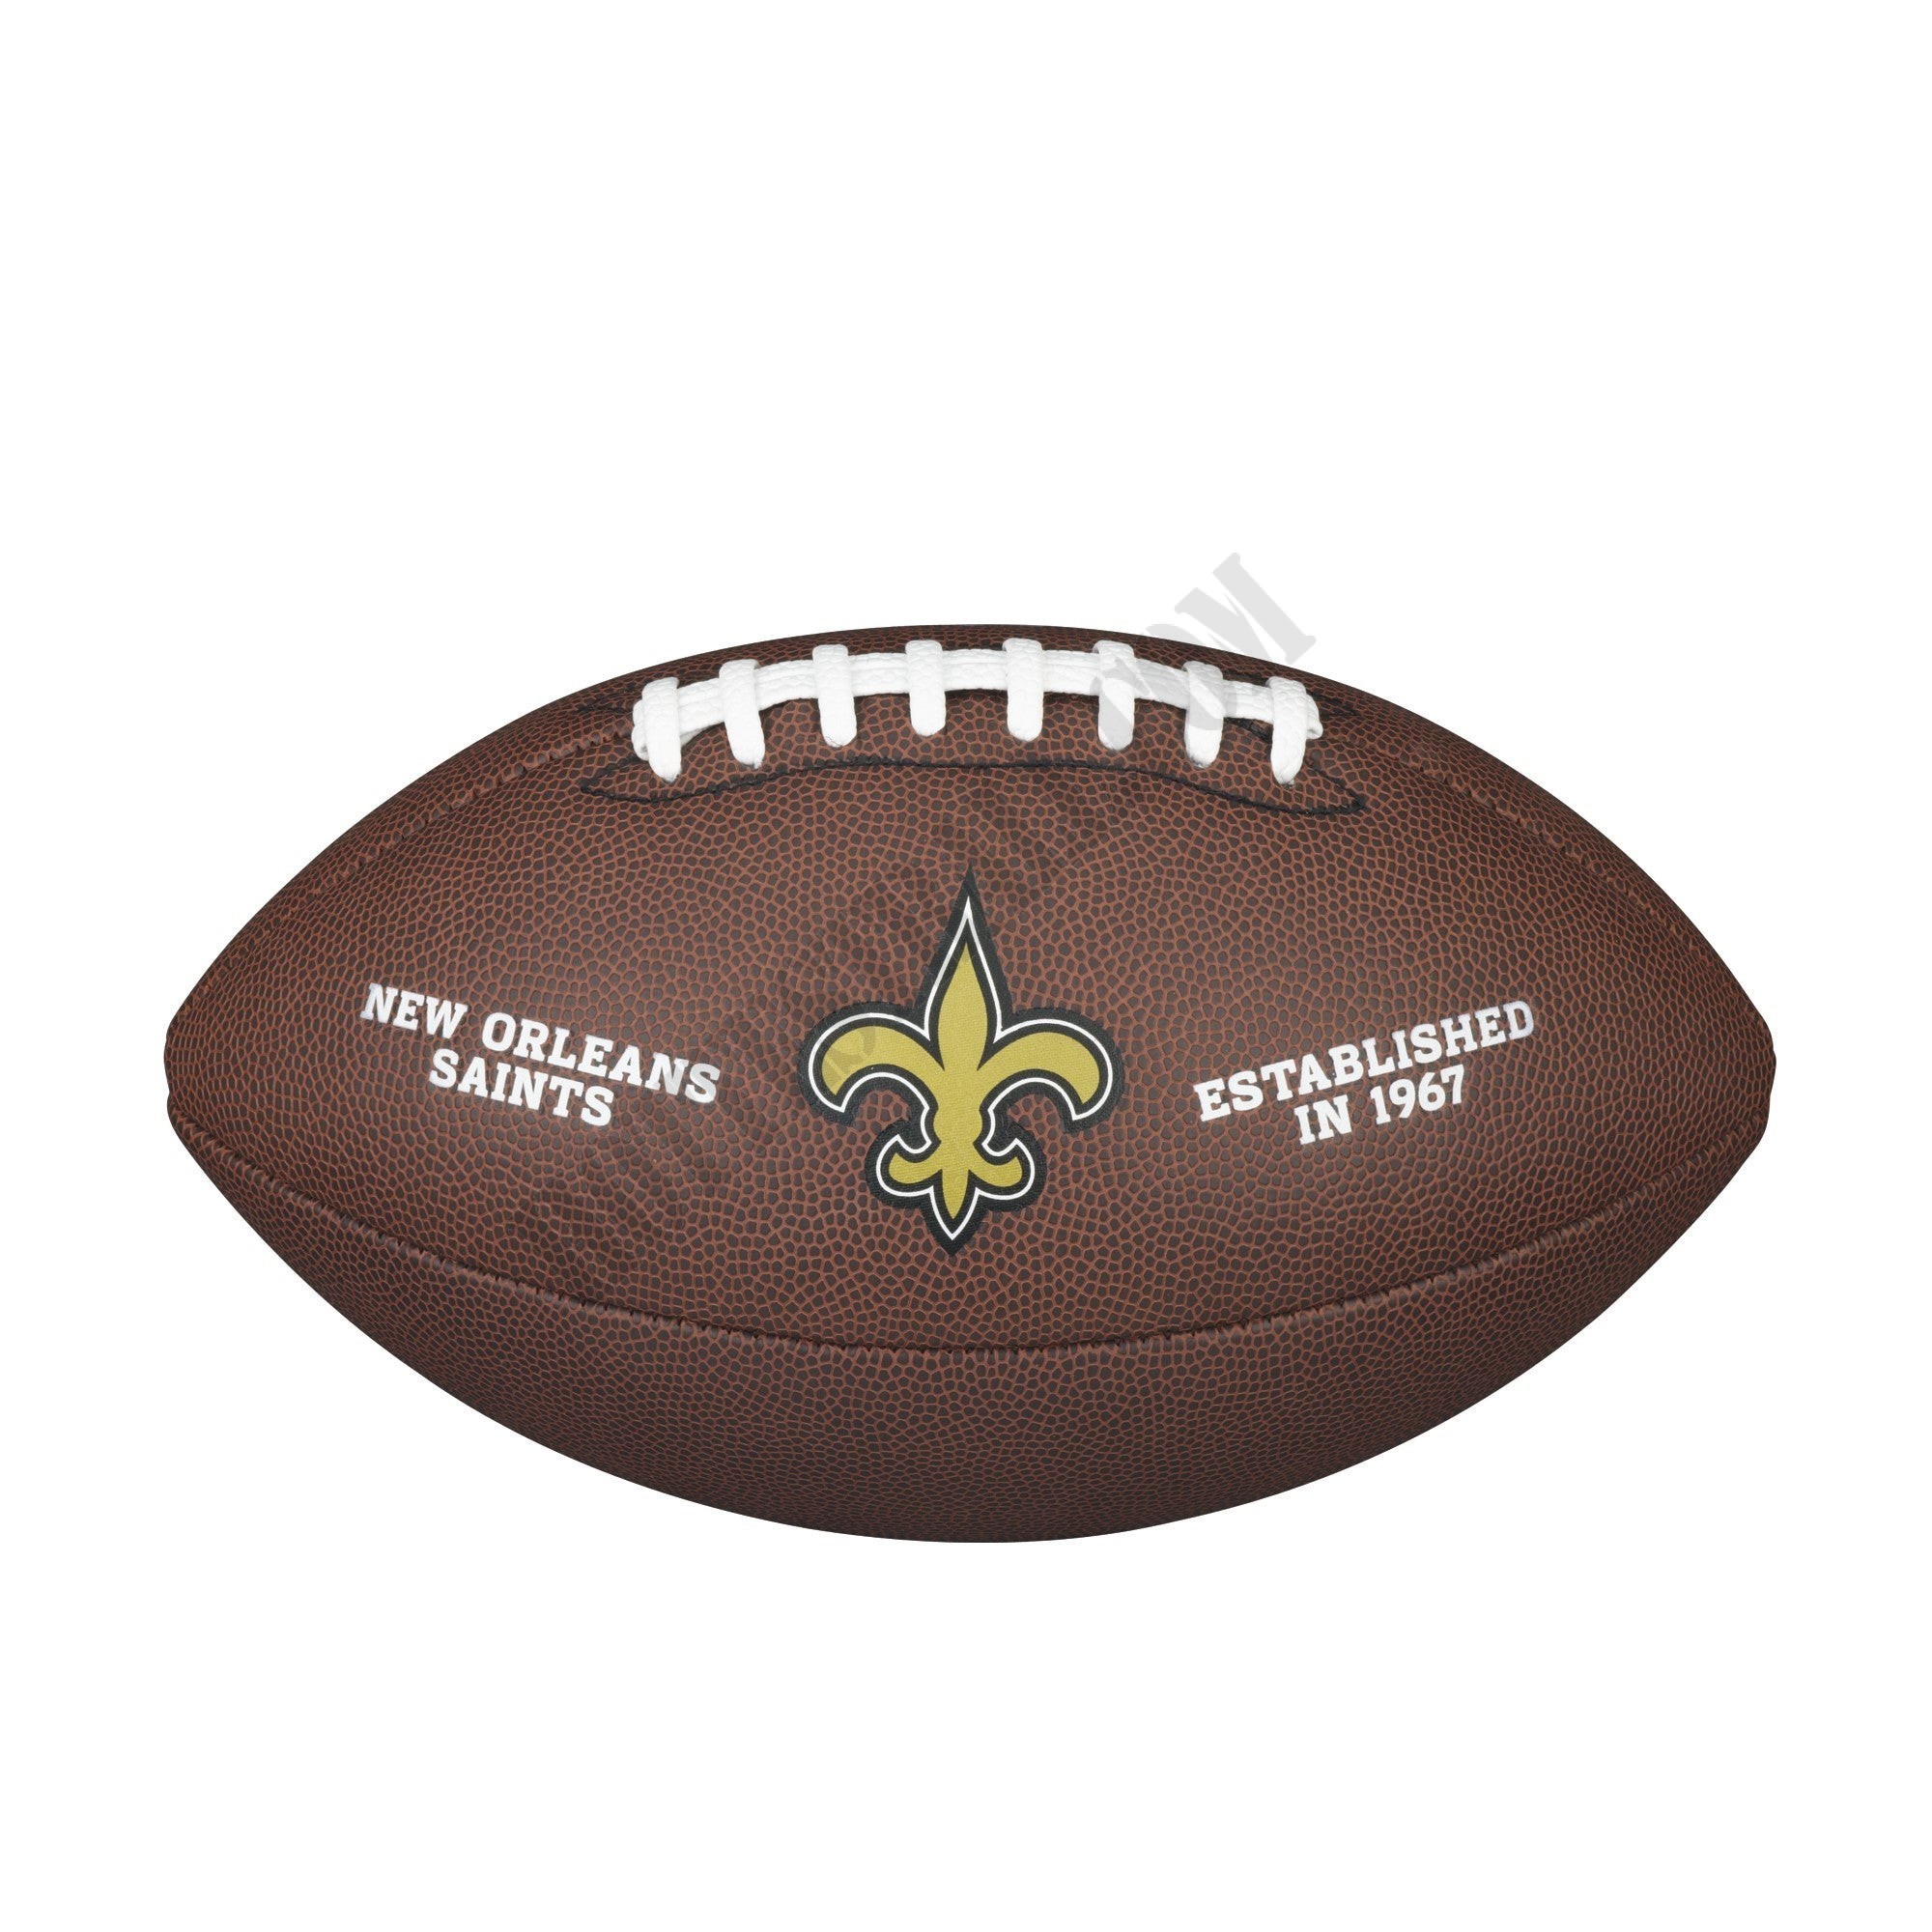 NFL Backyard Legend Football - New Orleans Saints ● Wilson Promotions - NFL Backyard Legend Football - New Orleans Saints ● Wilson Promotions